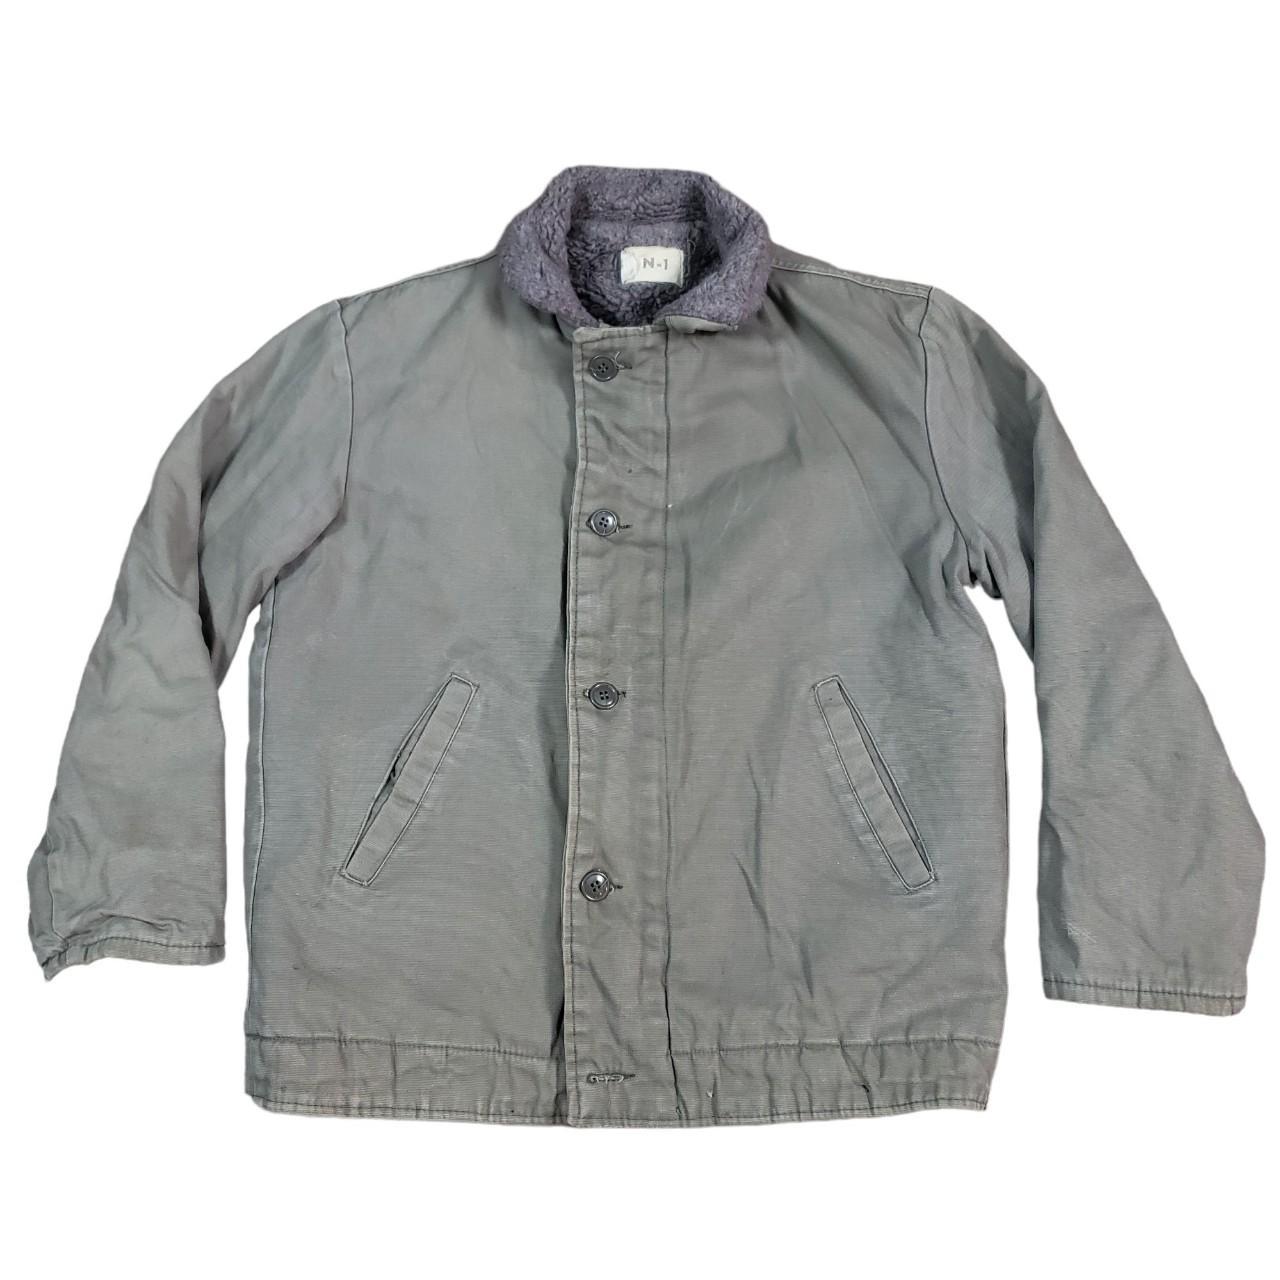 Vintage WWII N1 USN Civilian Deck Jacket with Sherpa... - Depop